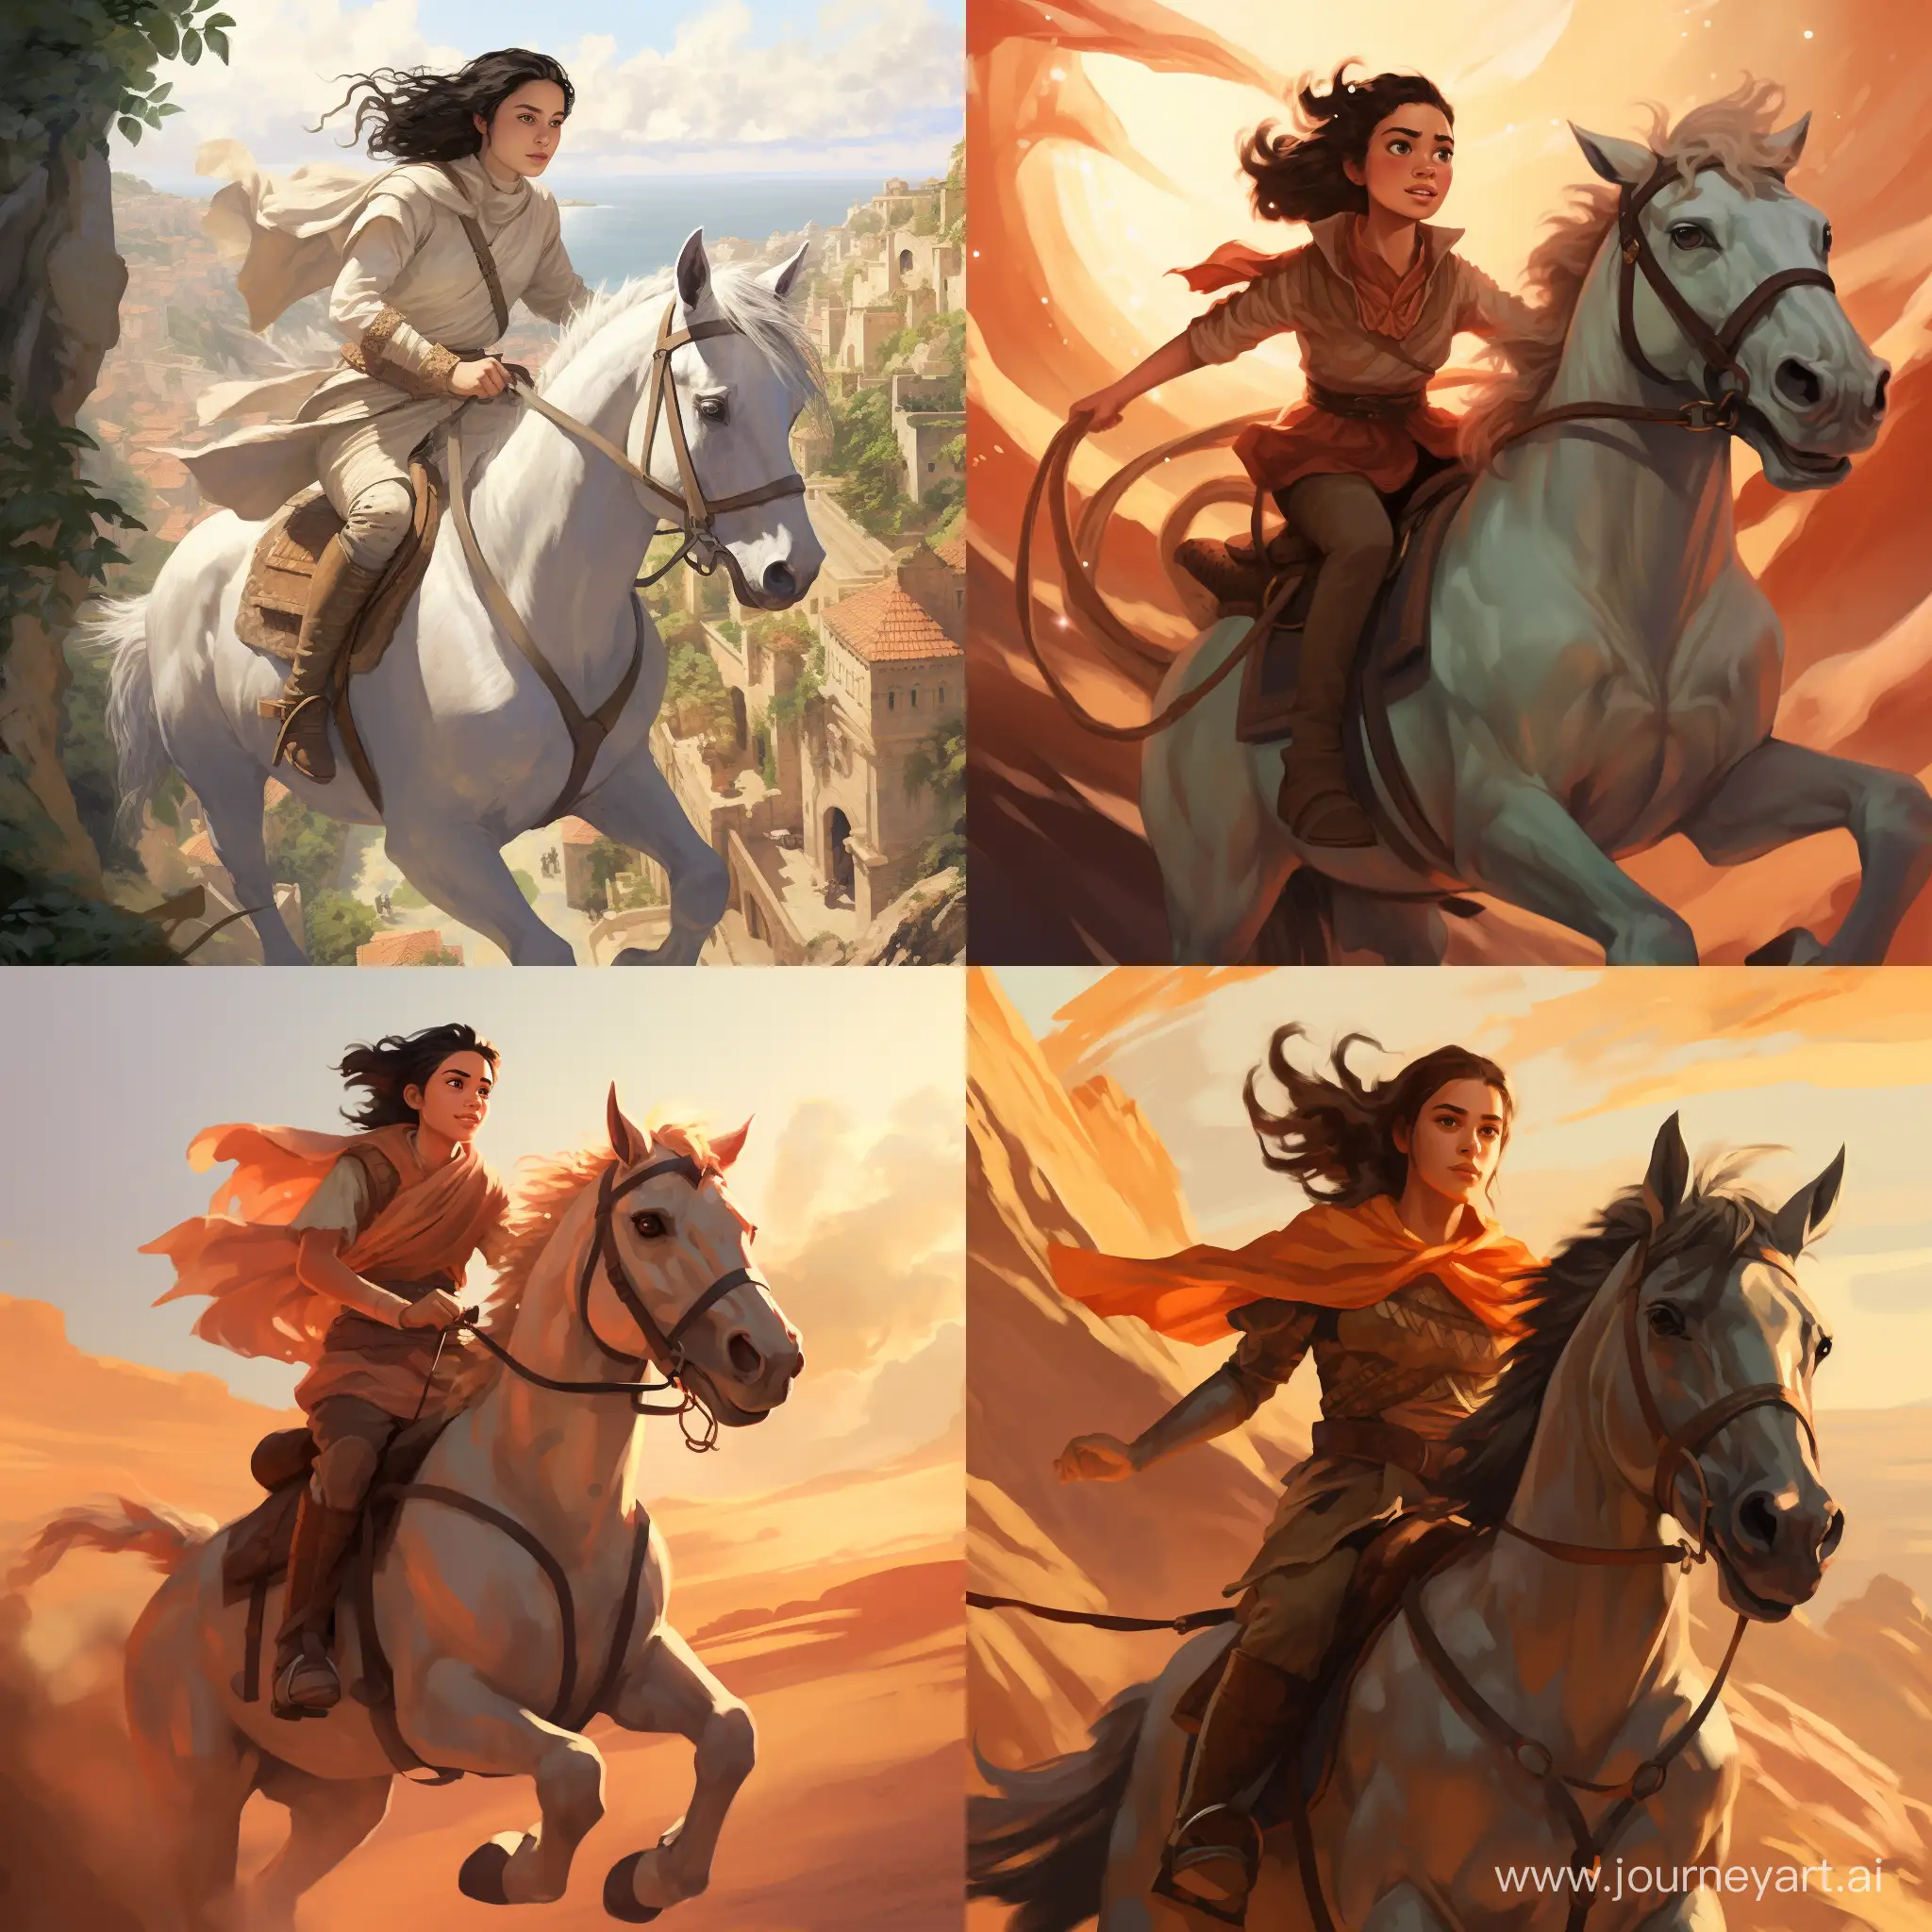 Arya-Stark-Riding-Sapphira-in-a-11-Aspect-Ratio